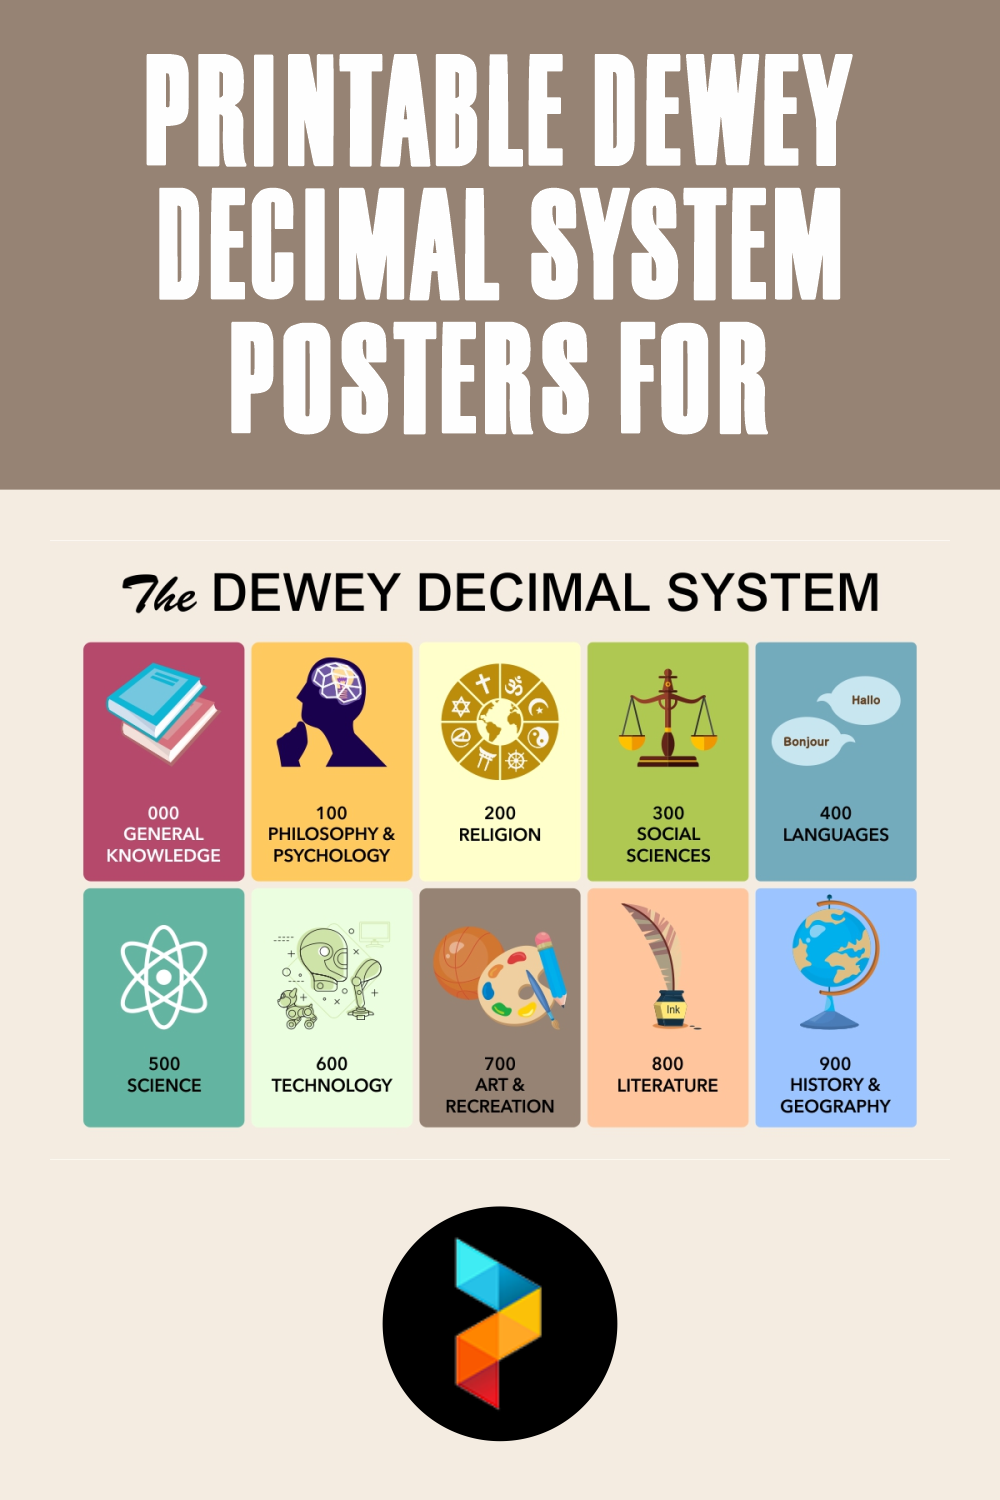 10 Best Printable Dewey Decimal System Posters For Free